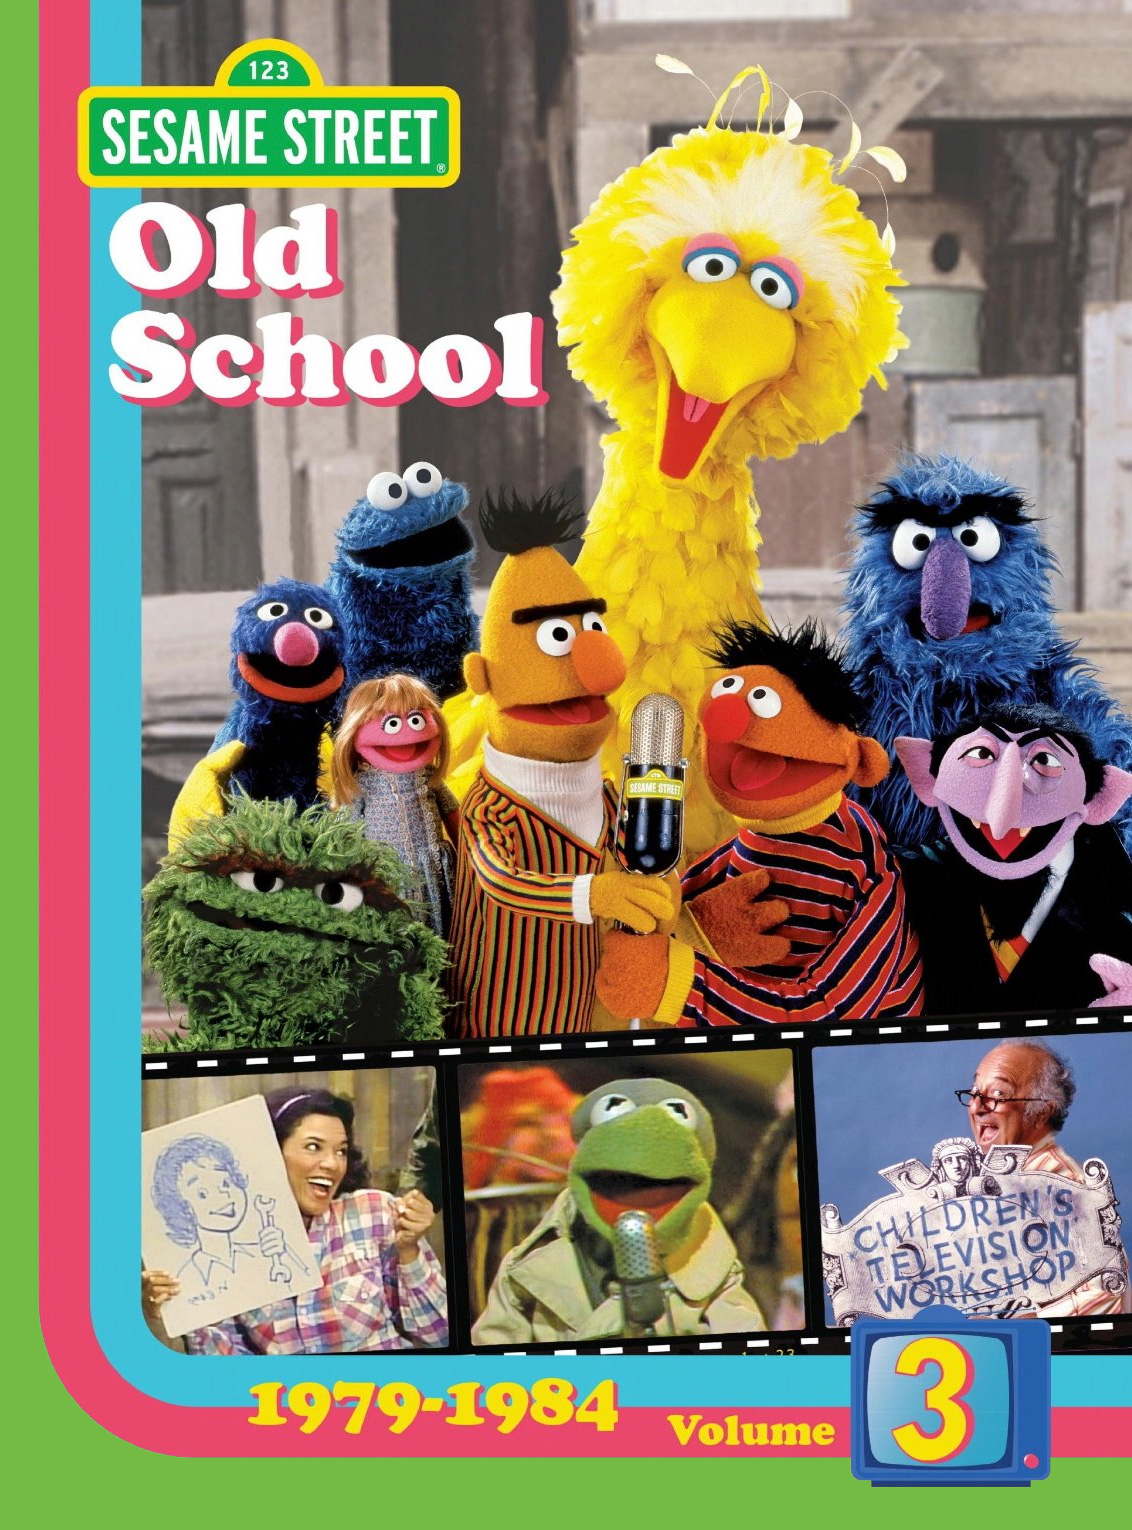 Sesame Street Old School: Volume 3 DVD Review